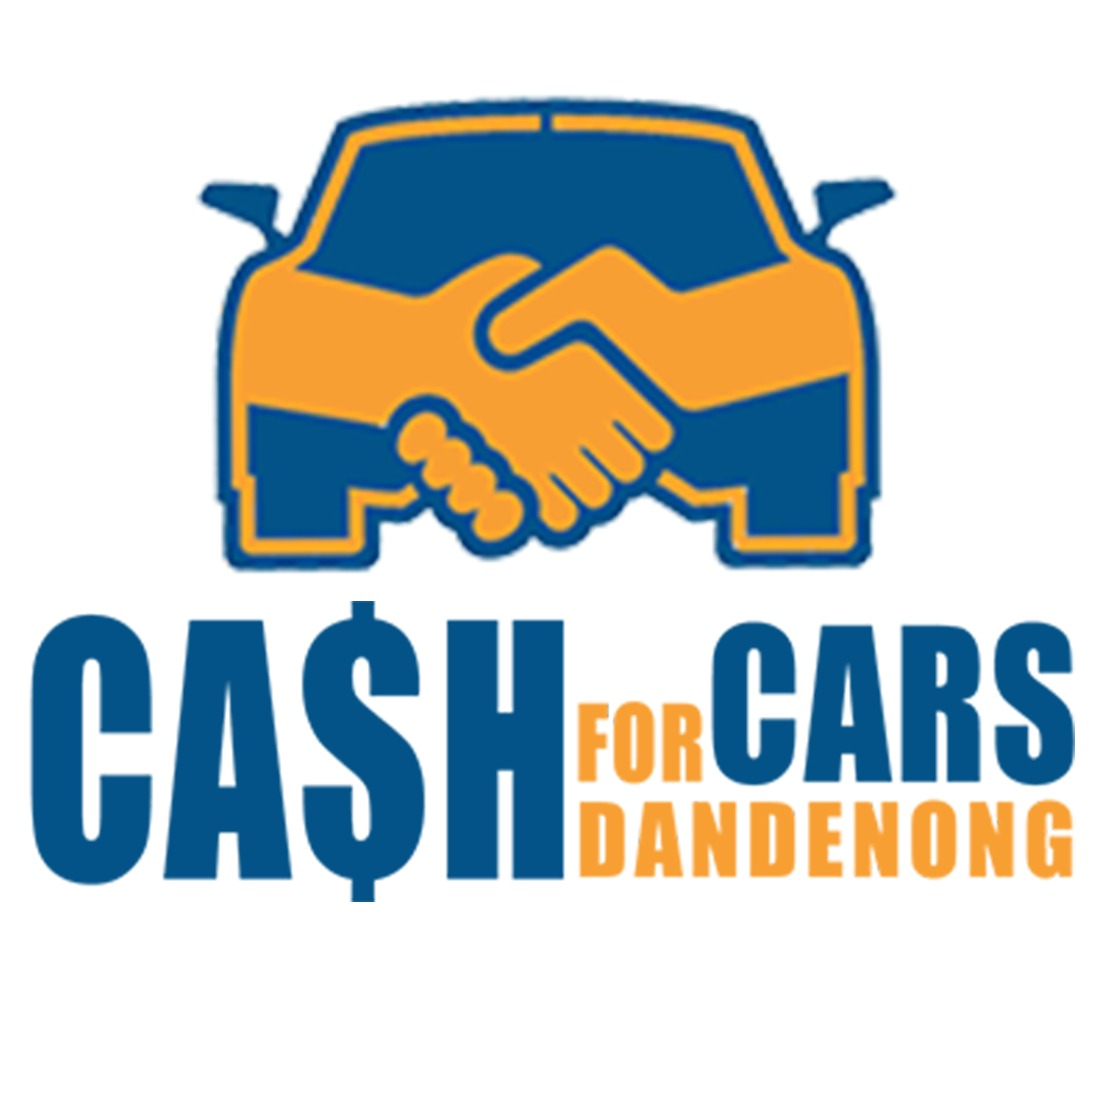 Cash for Cars Dandenong Greater Dandenong